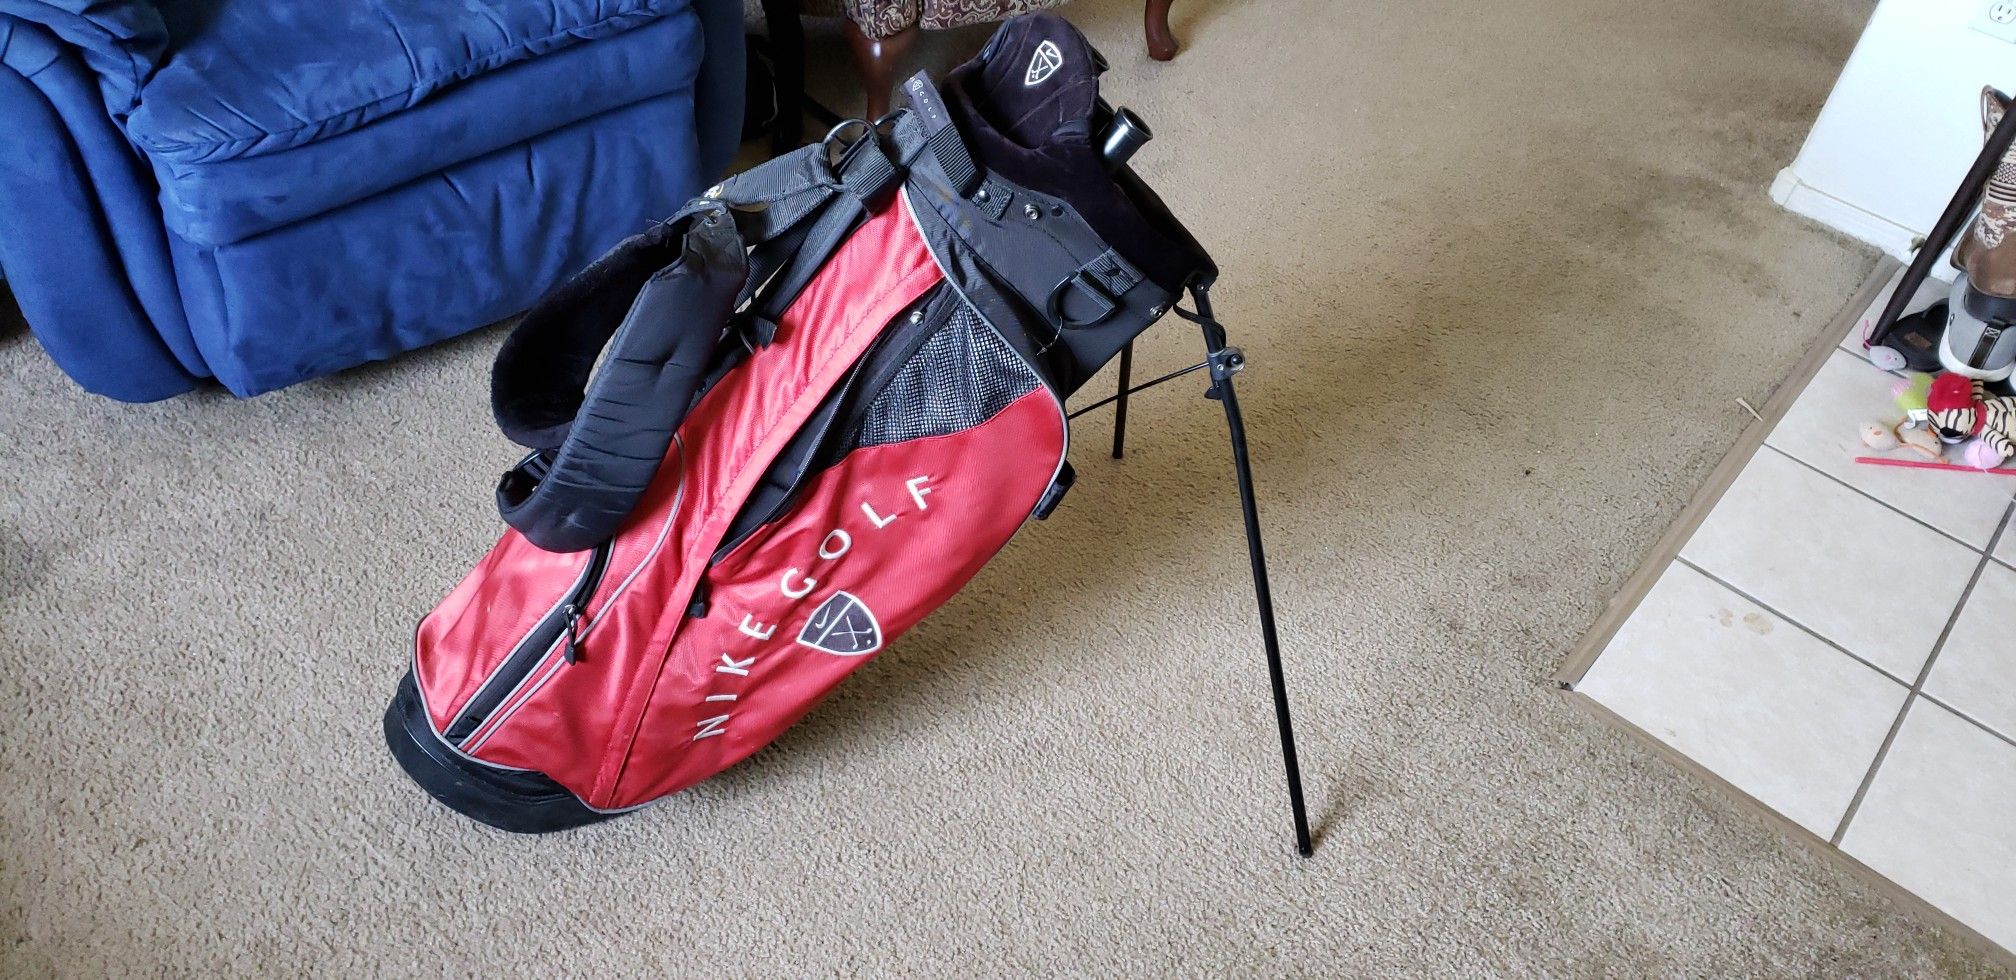 Nike Golf Club Bag